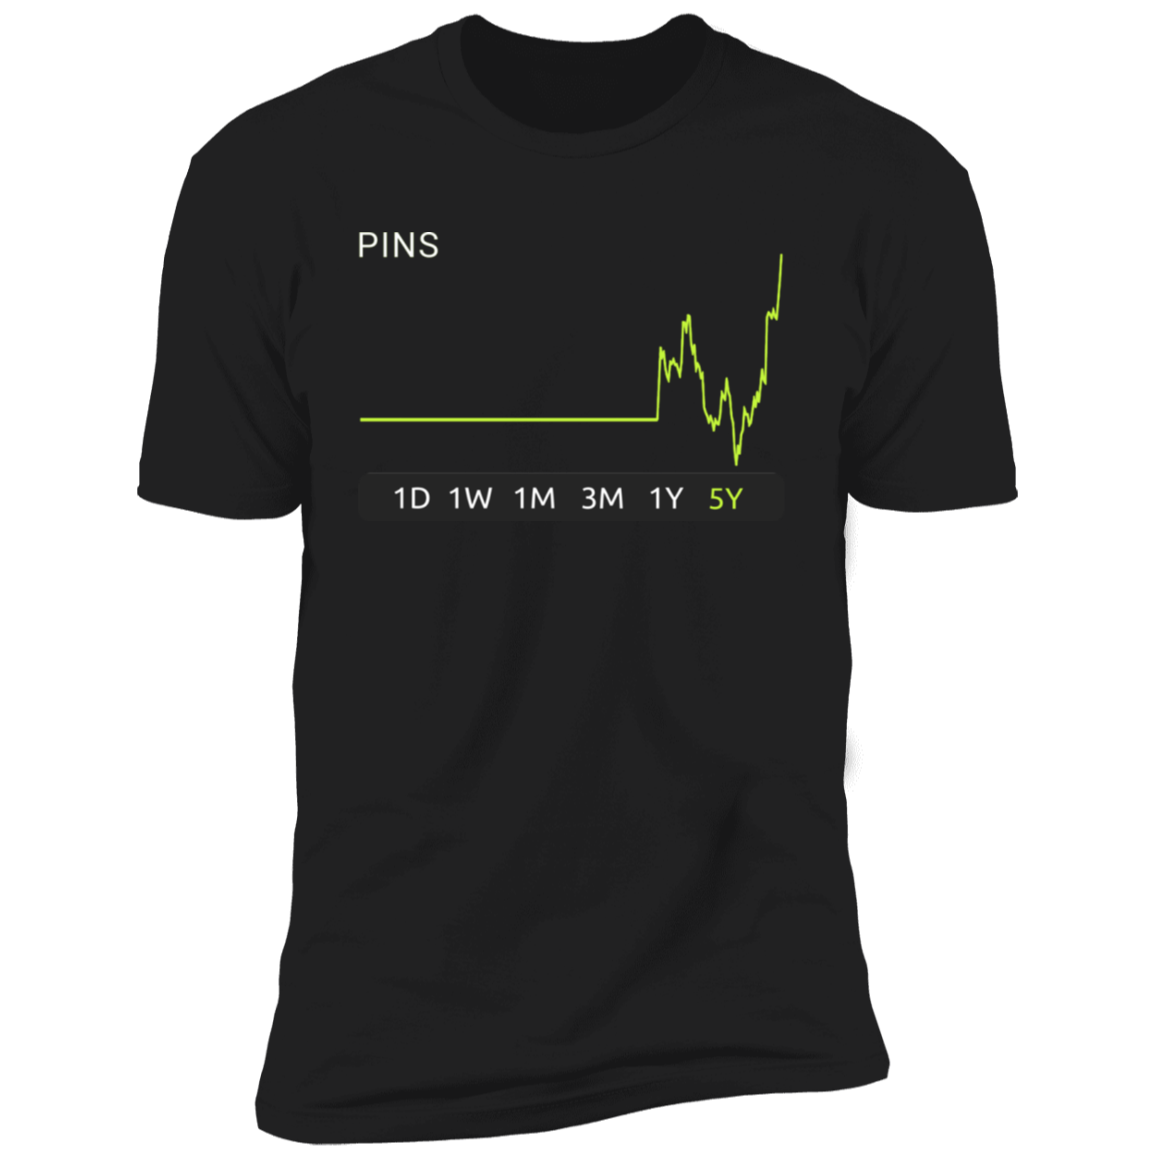 PINS Stock 5y Premium T-Shirt